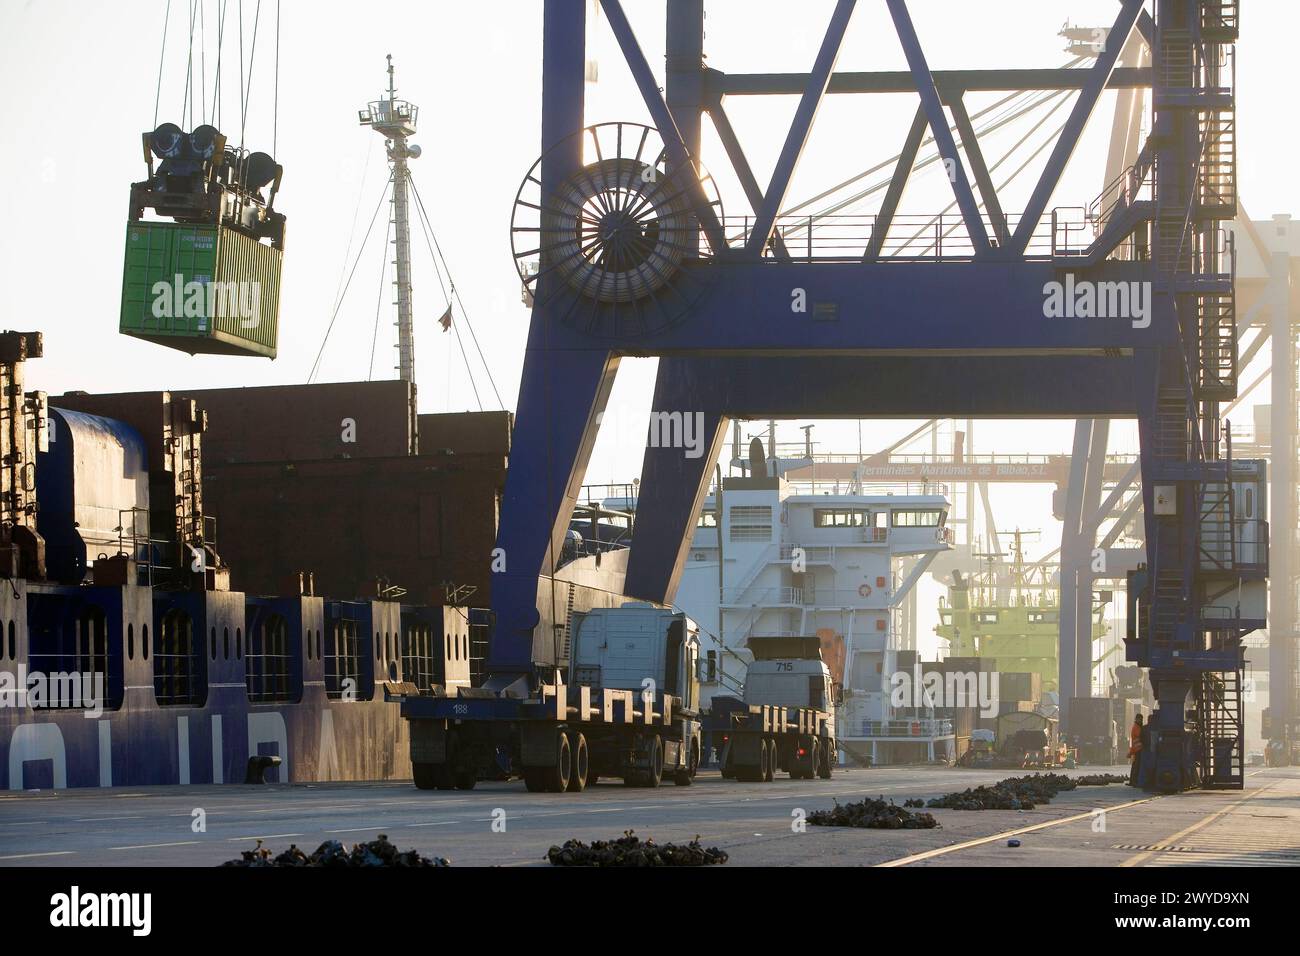 Loading cargo containers in ship, Port of Bilbao, Santurtzi. Biscay, Euskadi, Spain. Stock Photo